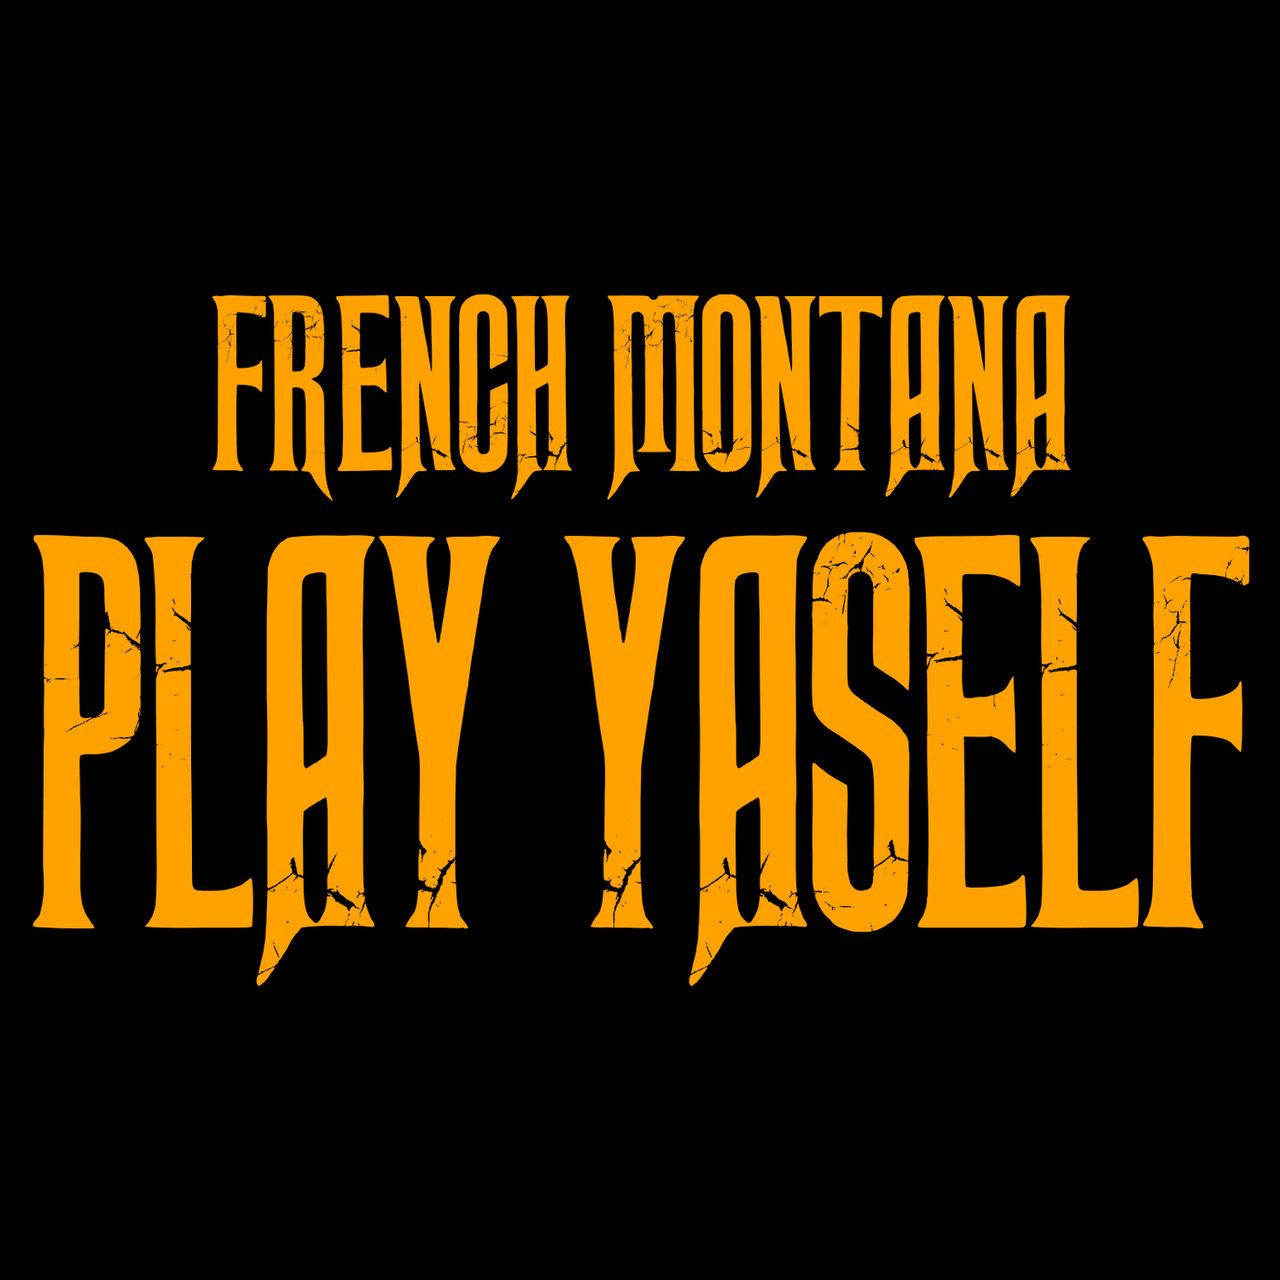 Play Yaself [2016]